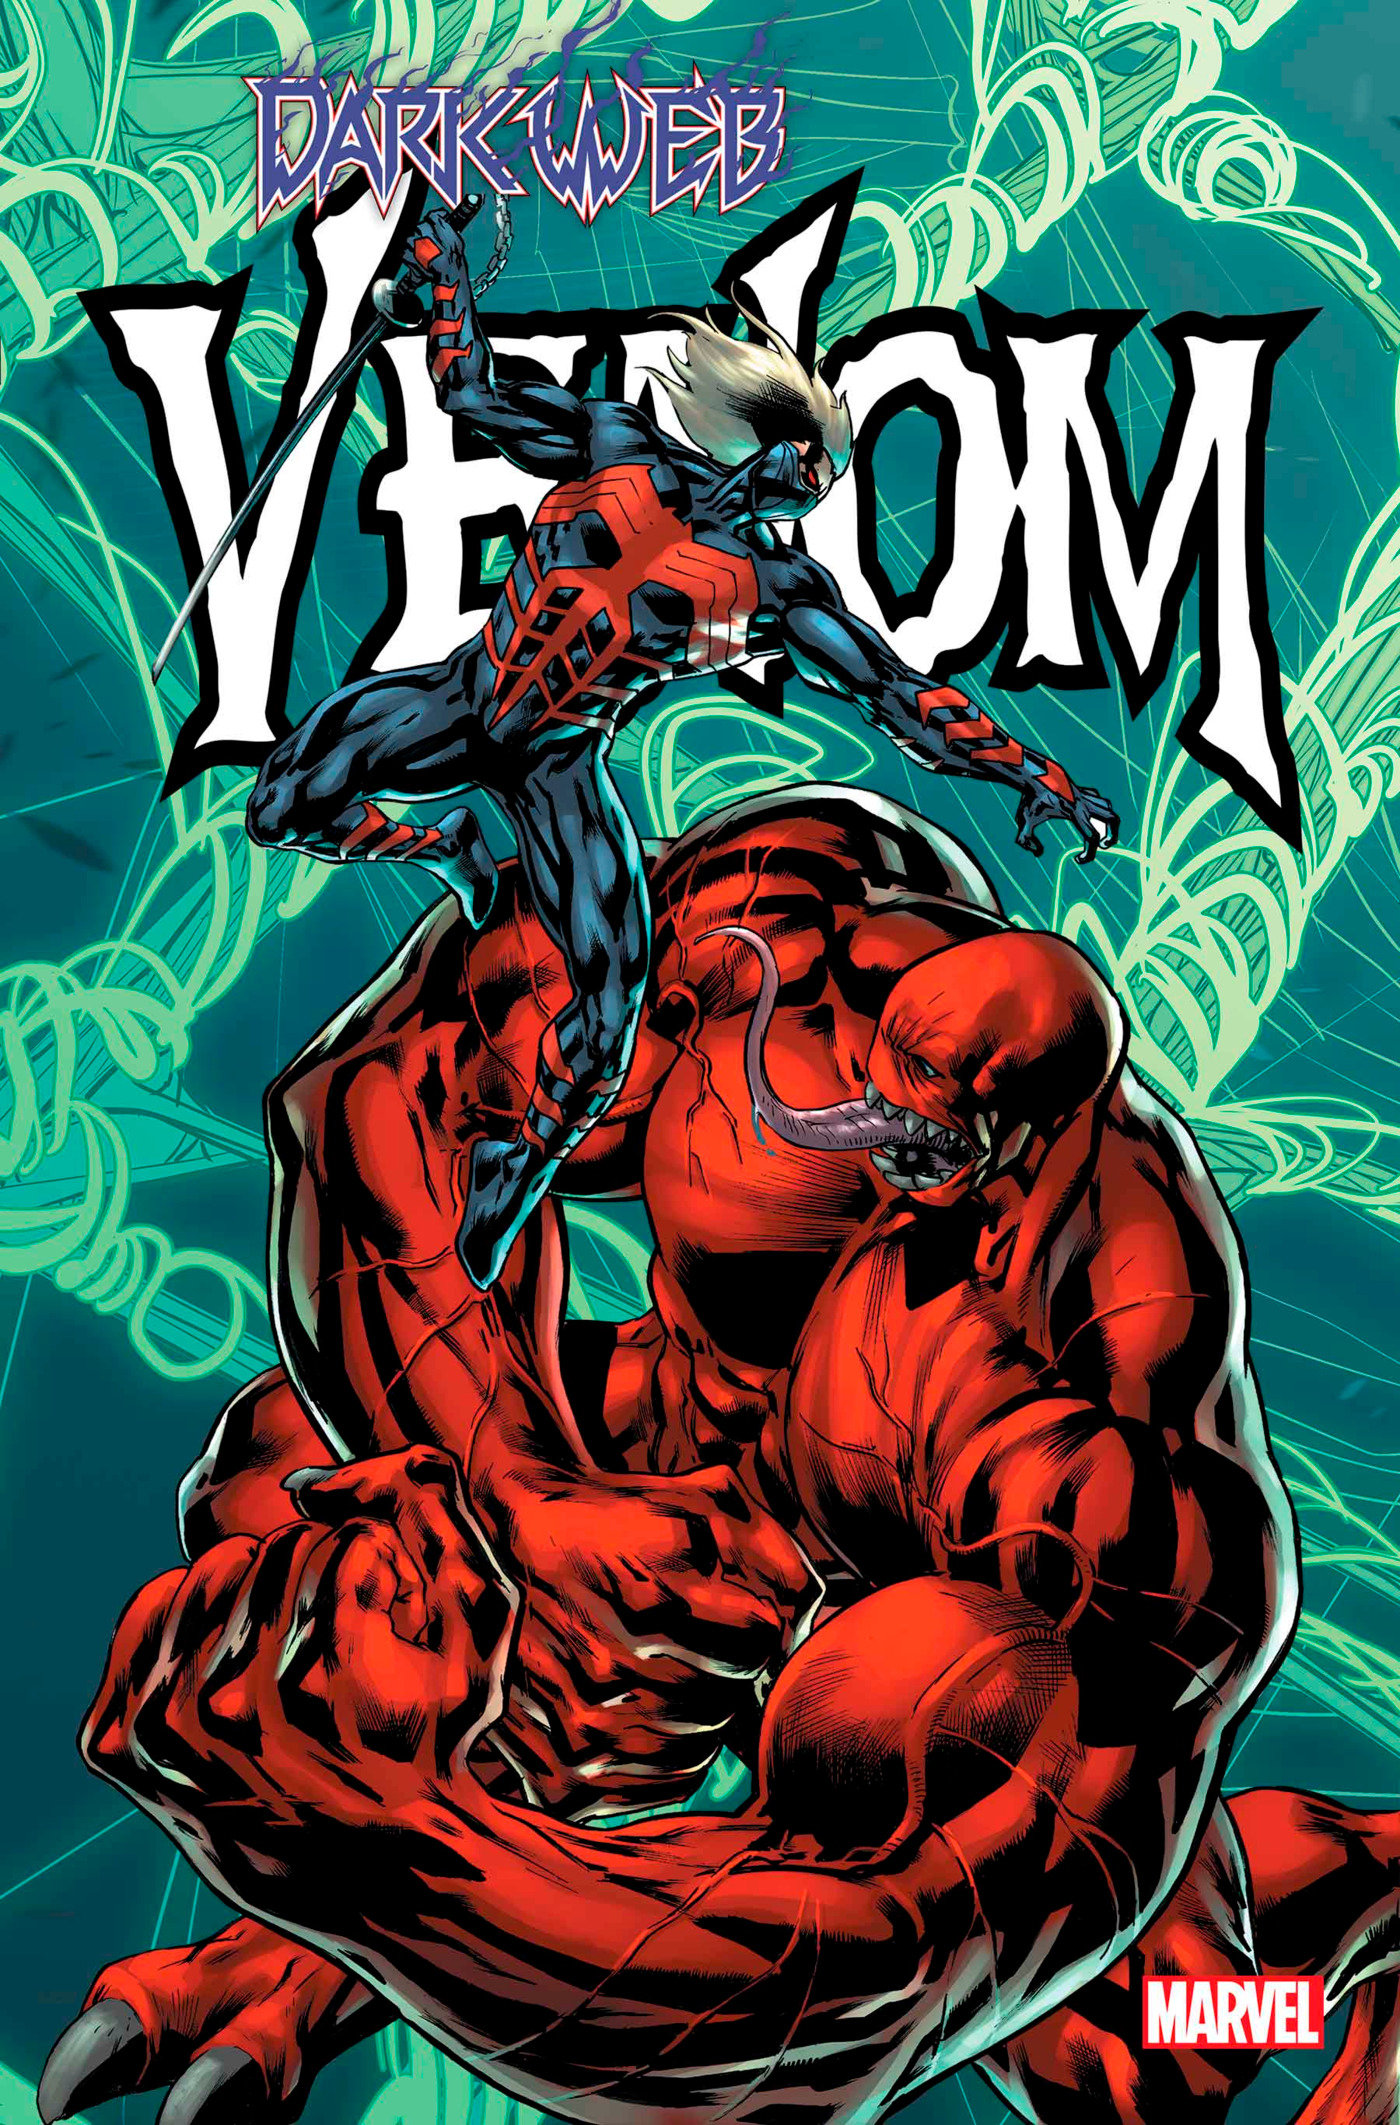 Venom #15 [Dark Web]